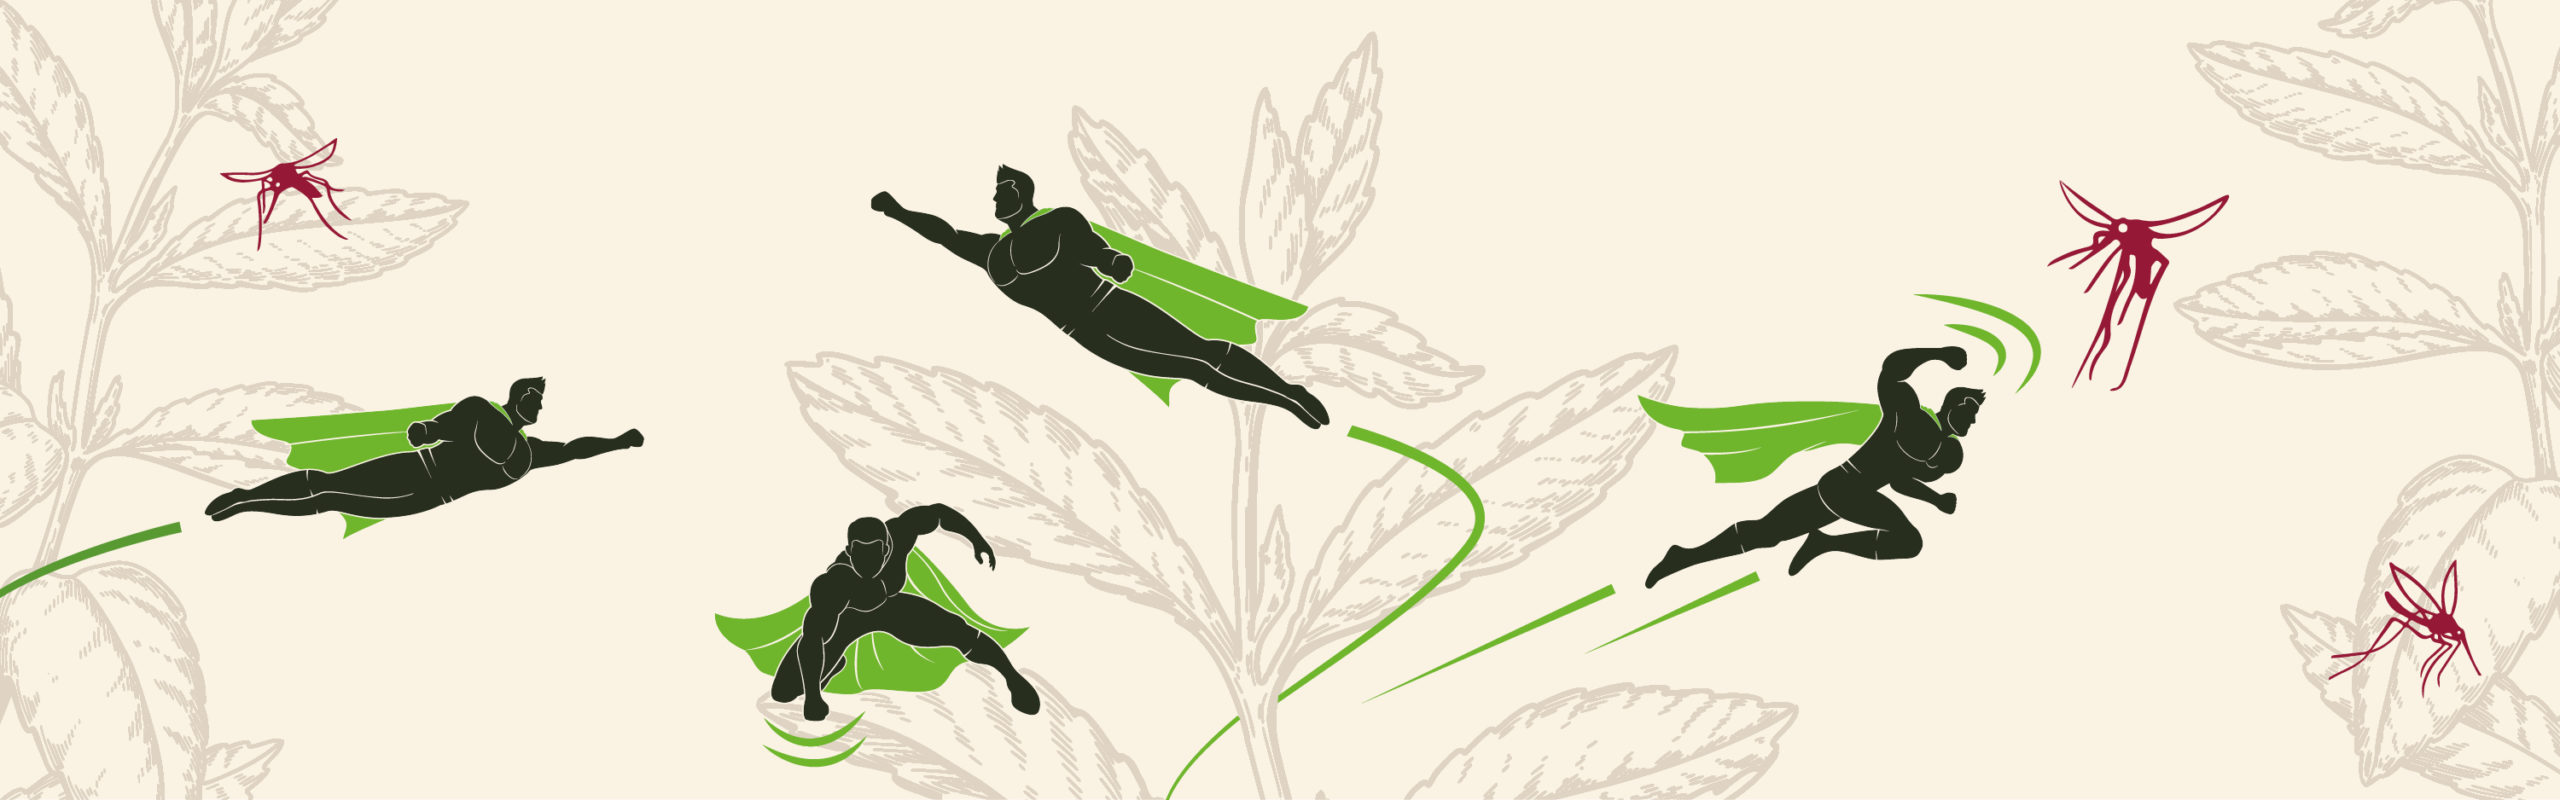 Image Description: silhouettes of superheroes flying around giant plants, saving them. End description.